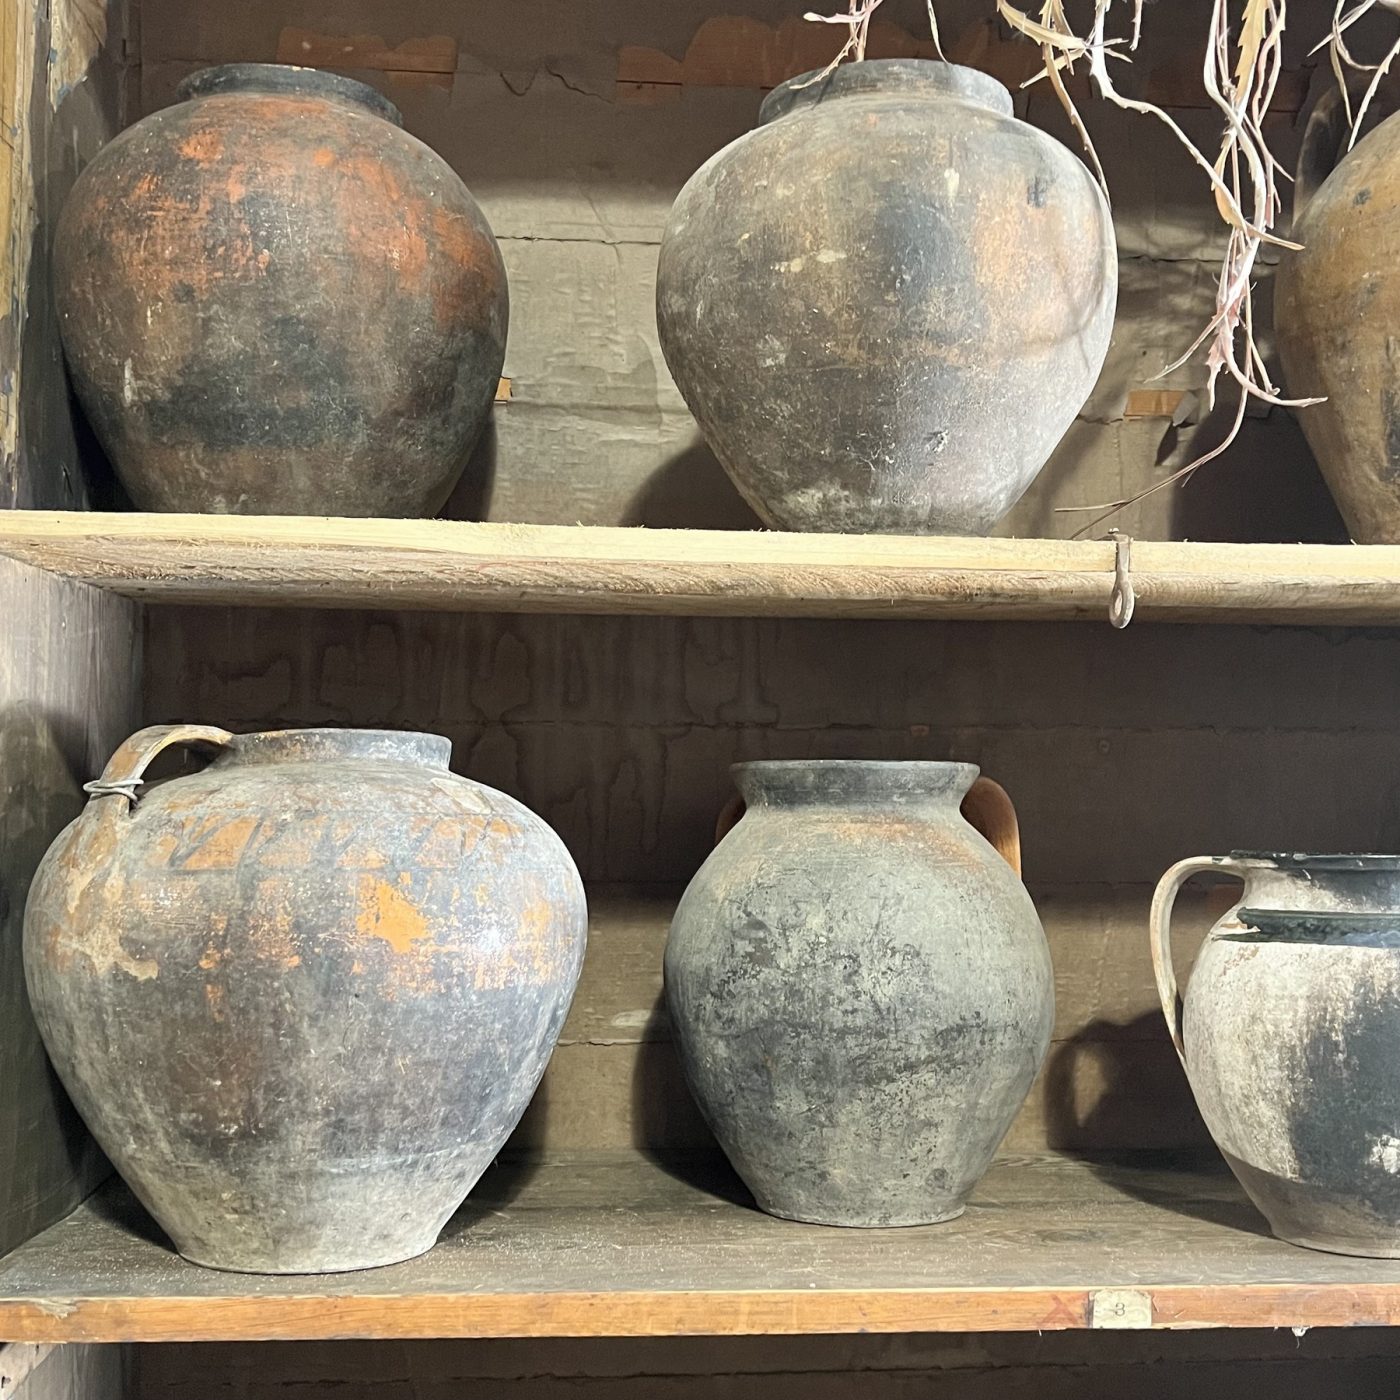 objet-vagabond-pottery-collection0001